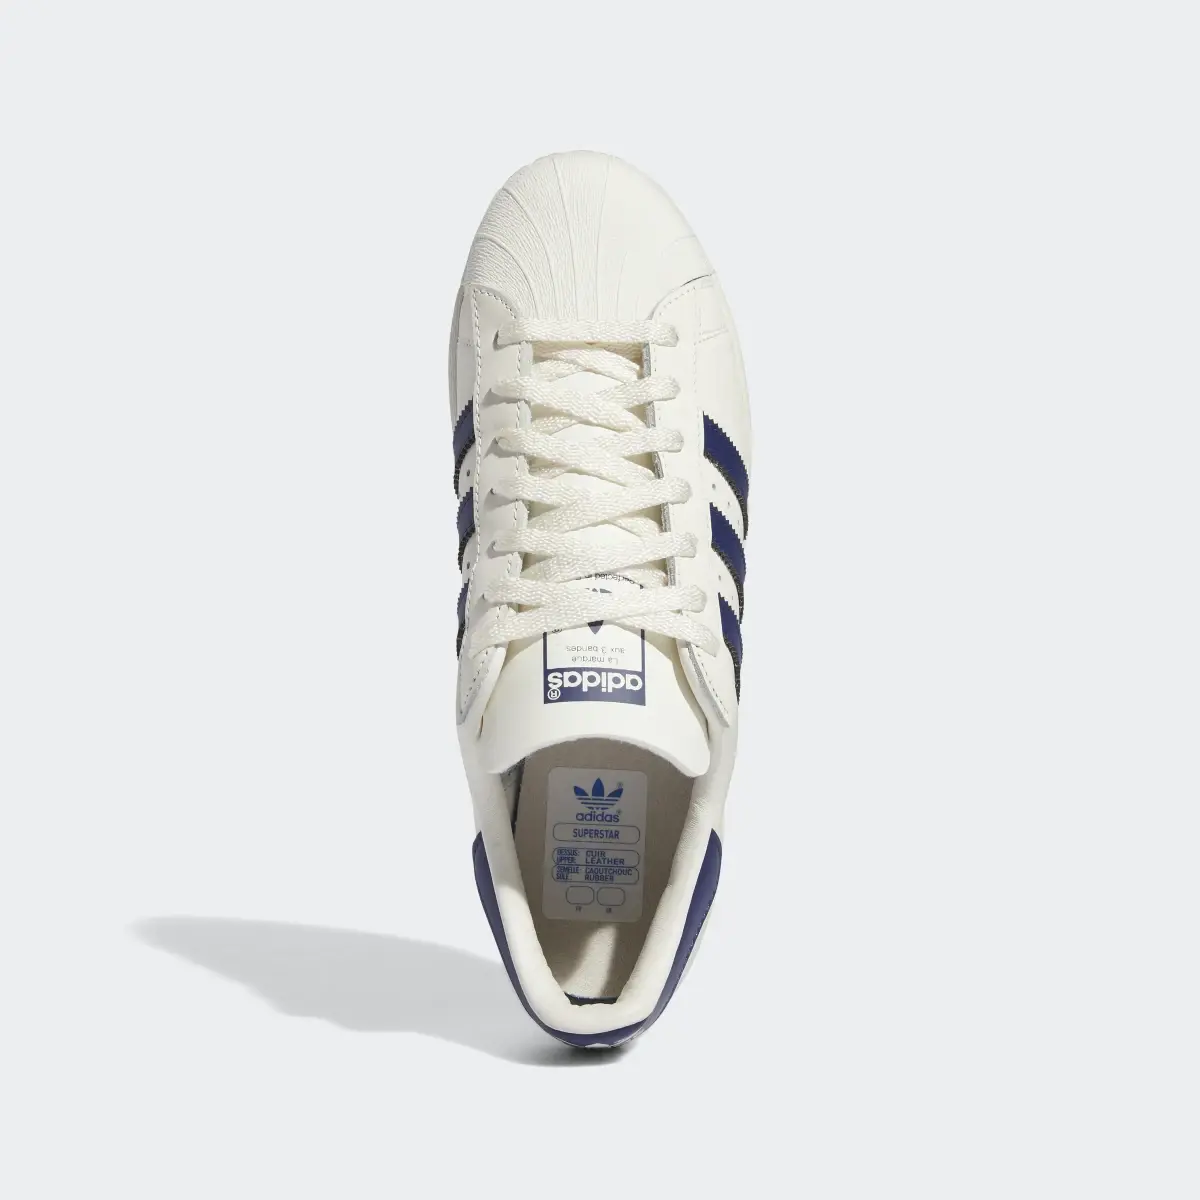 Adidas Superstar 82 Shoes. 3